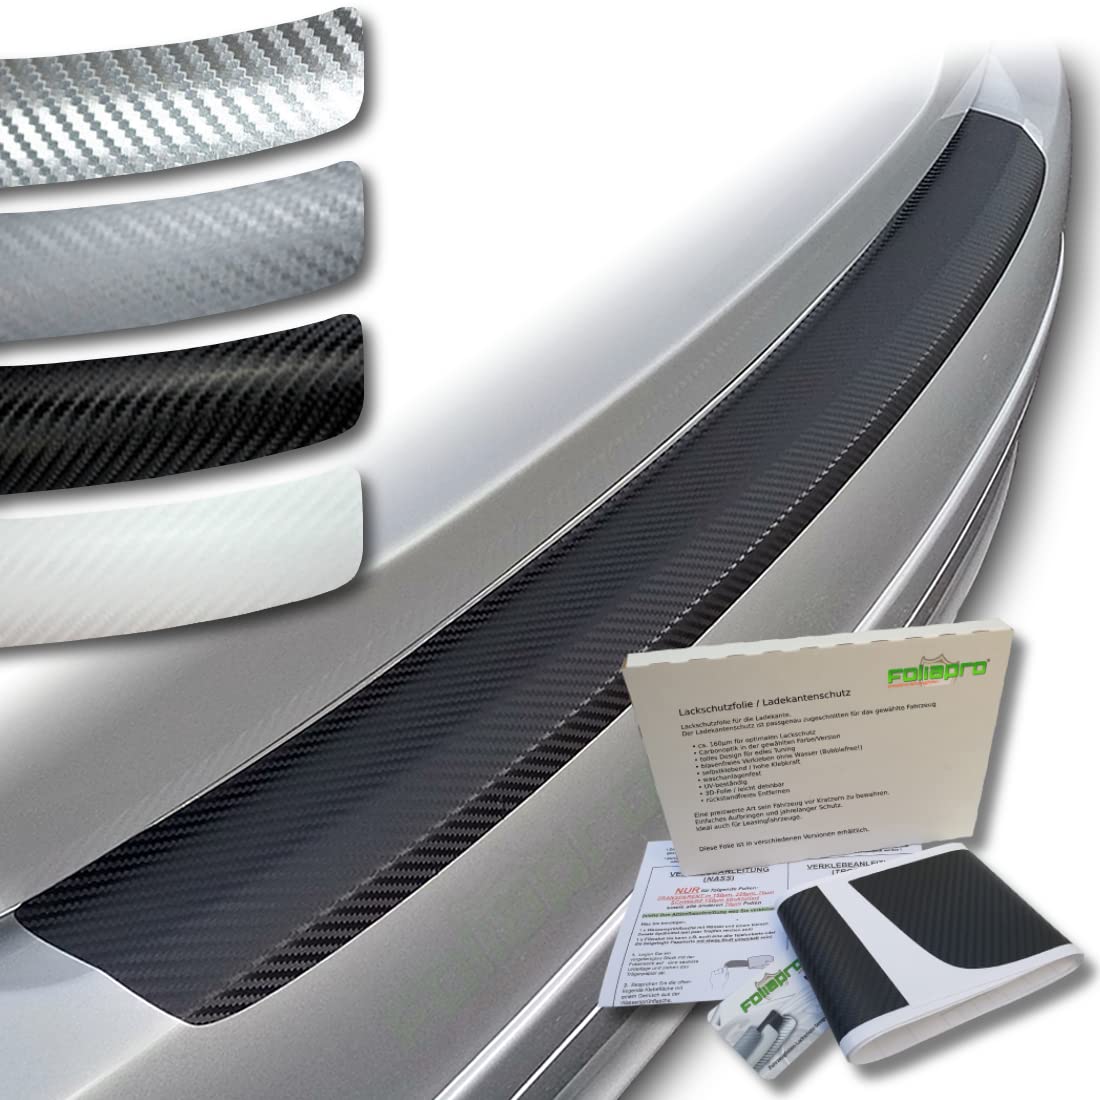 foliapro Lackschutzfolie Ladekantenschutz-Folie Carbonfolie Carbon - Fahrzeug und Foliensorte wählbar - für Audi A4/S4 Avant B8 ab 2008 bis 2015 - Carbon Silber von foliapro